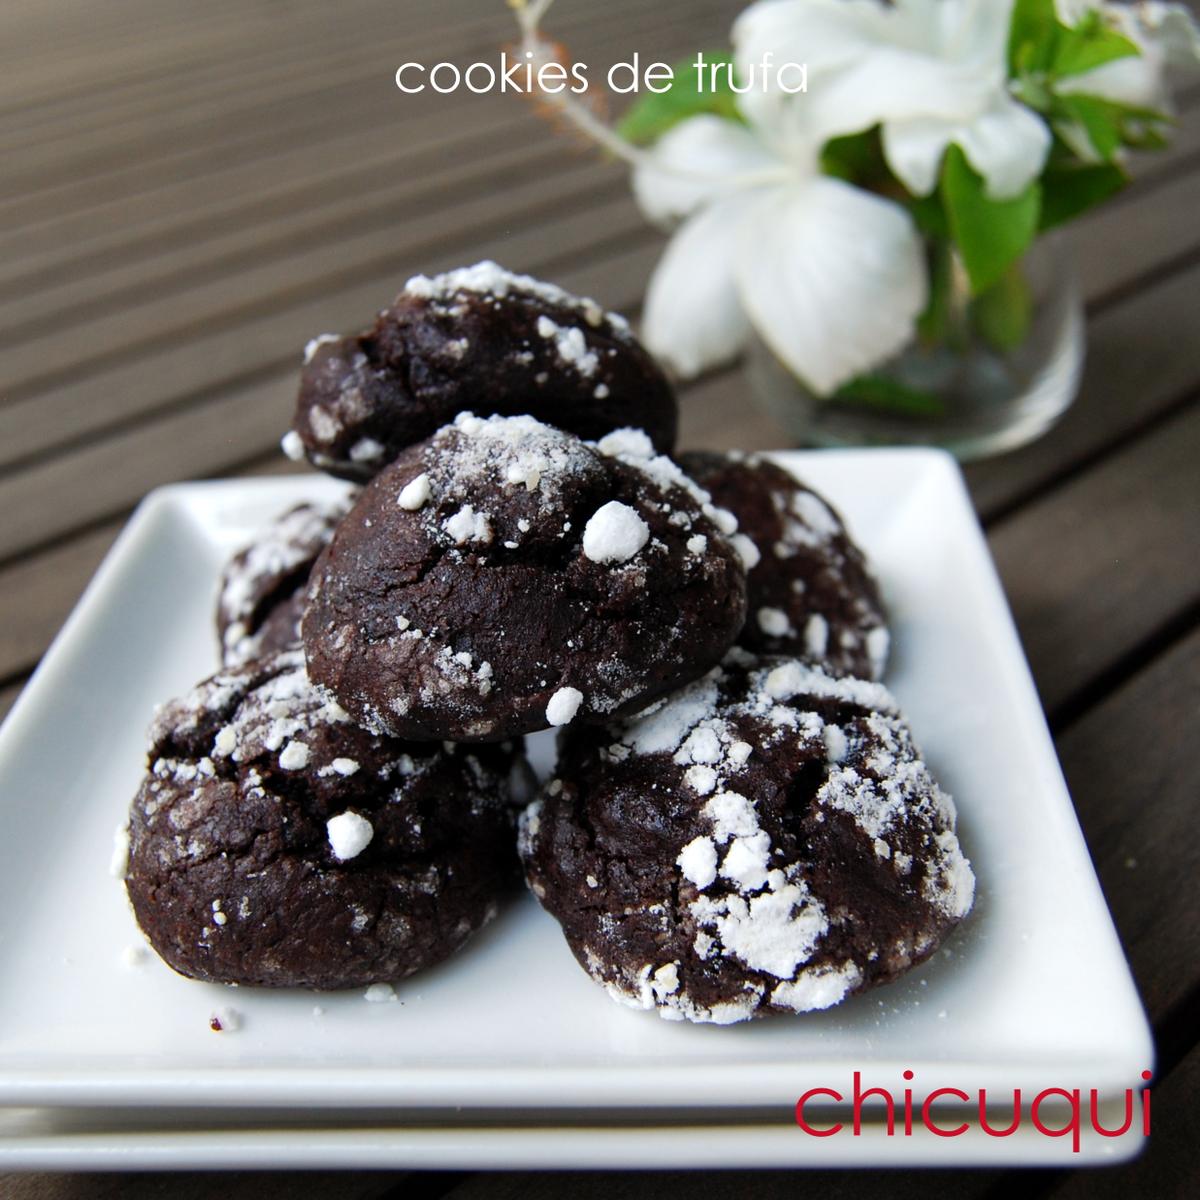 receta de cookies de trufa chocolate recipe truffle dough cookies chicuqui.com